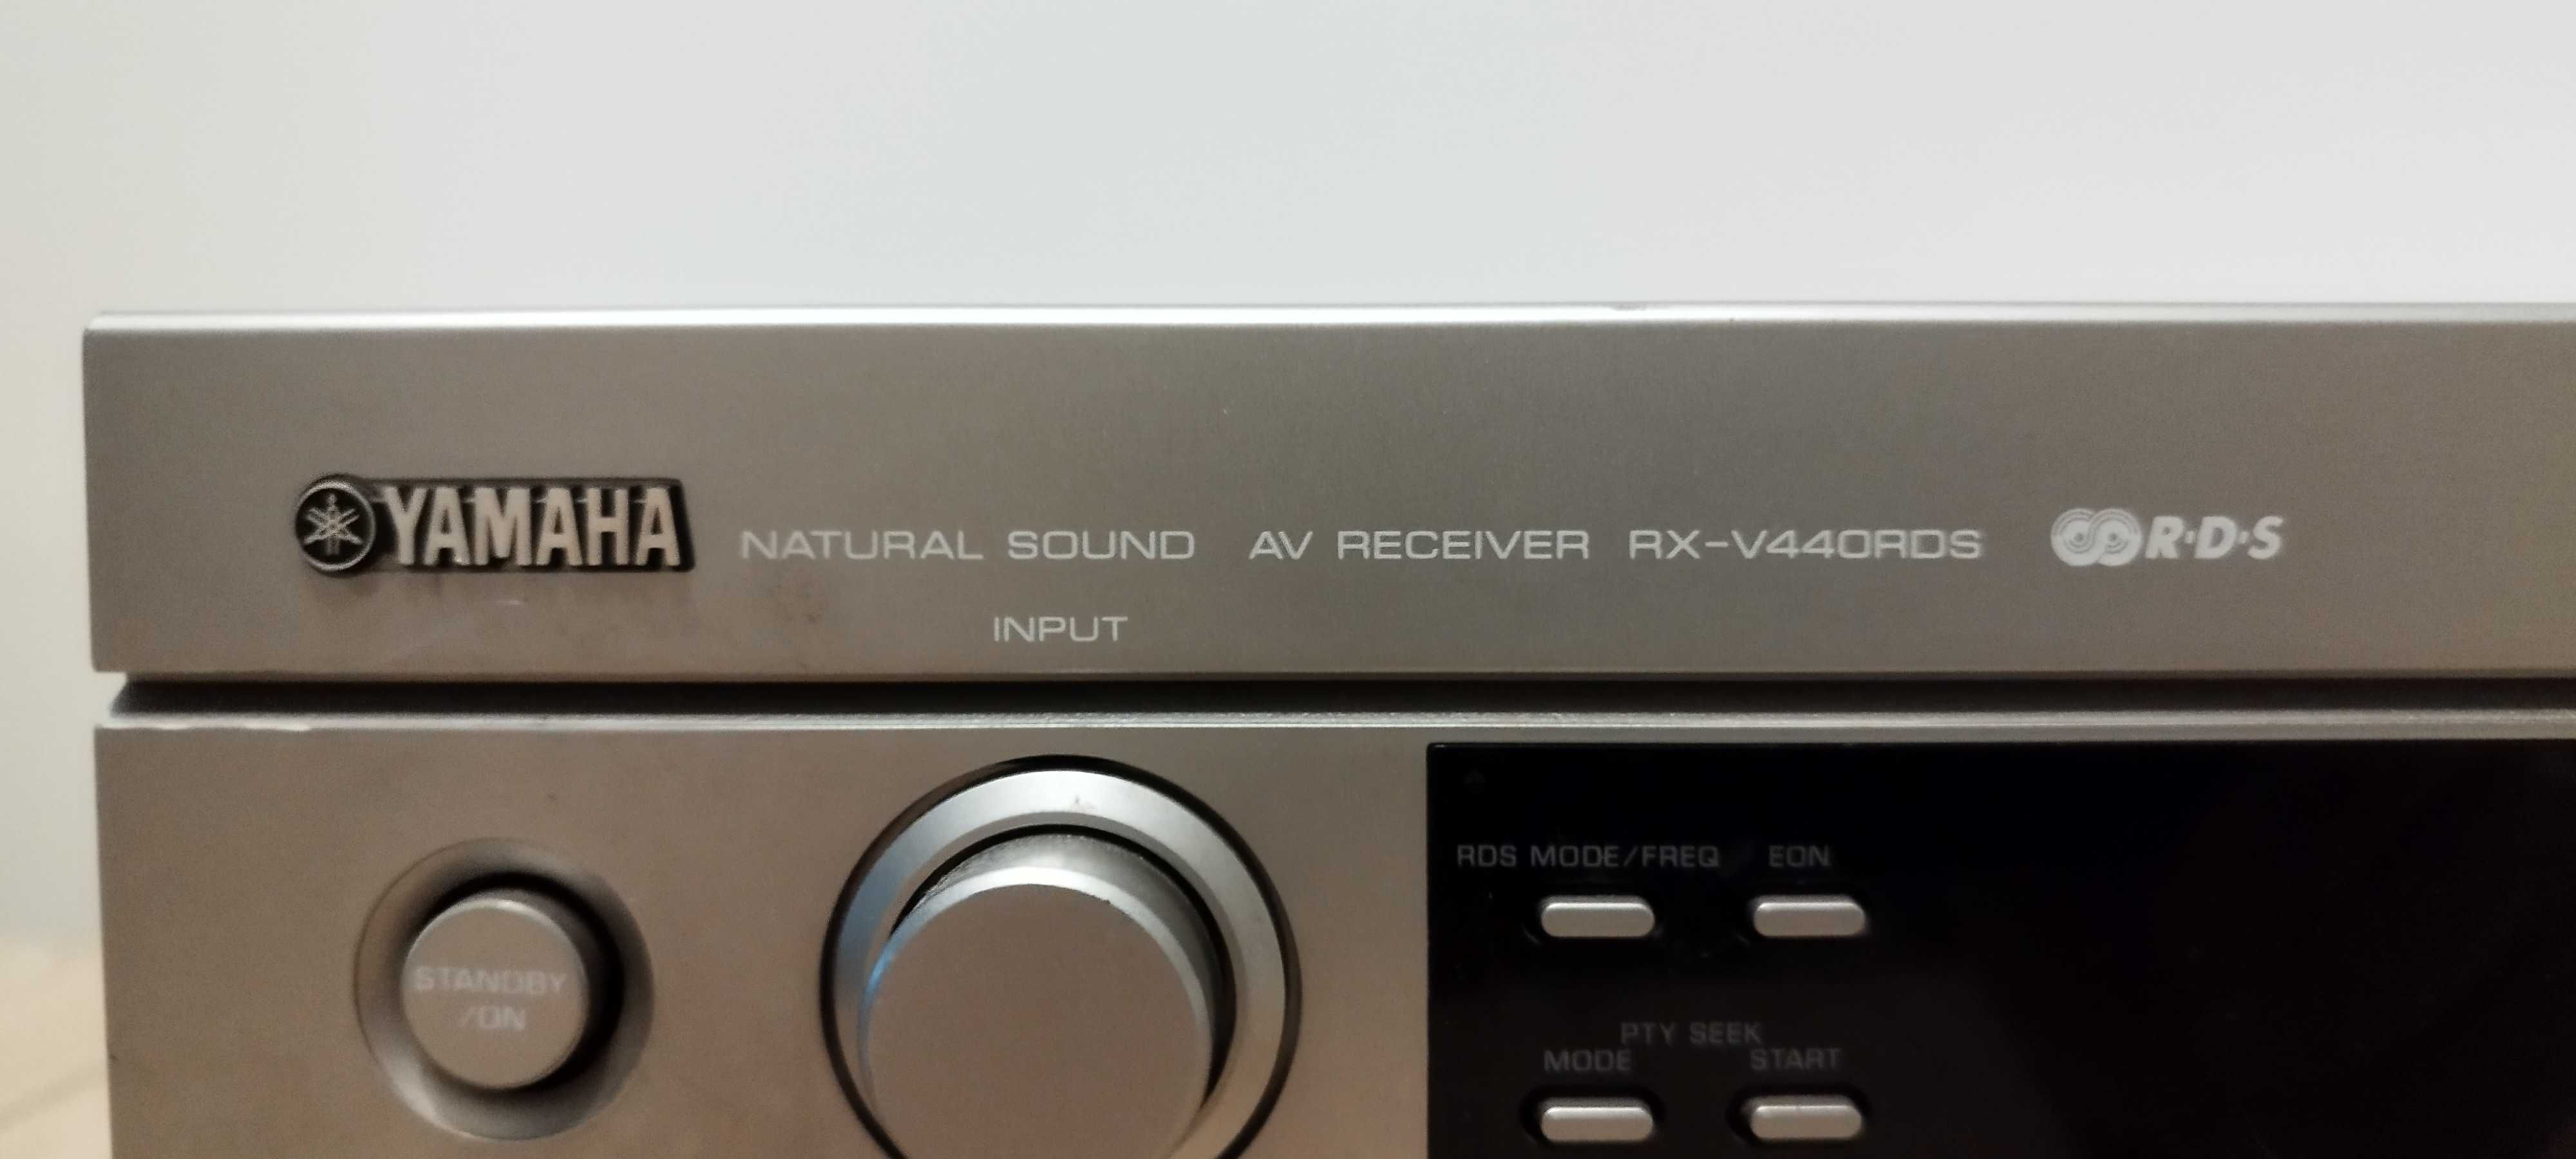 Amplituner Yamaha RX-V440RDS